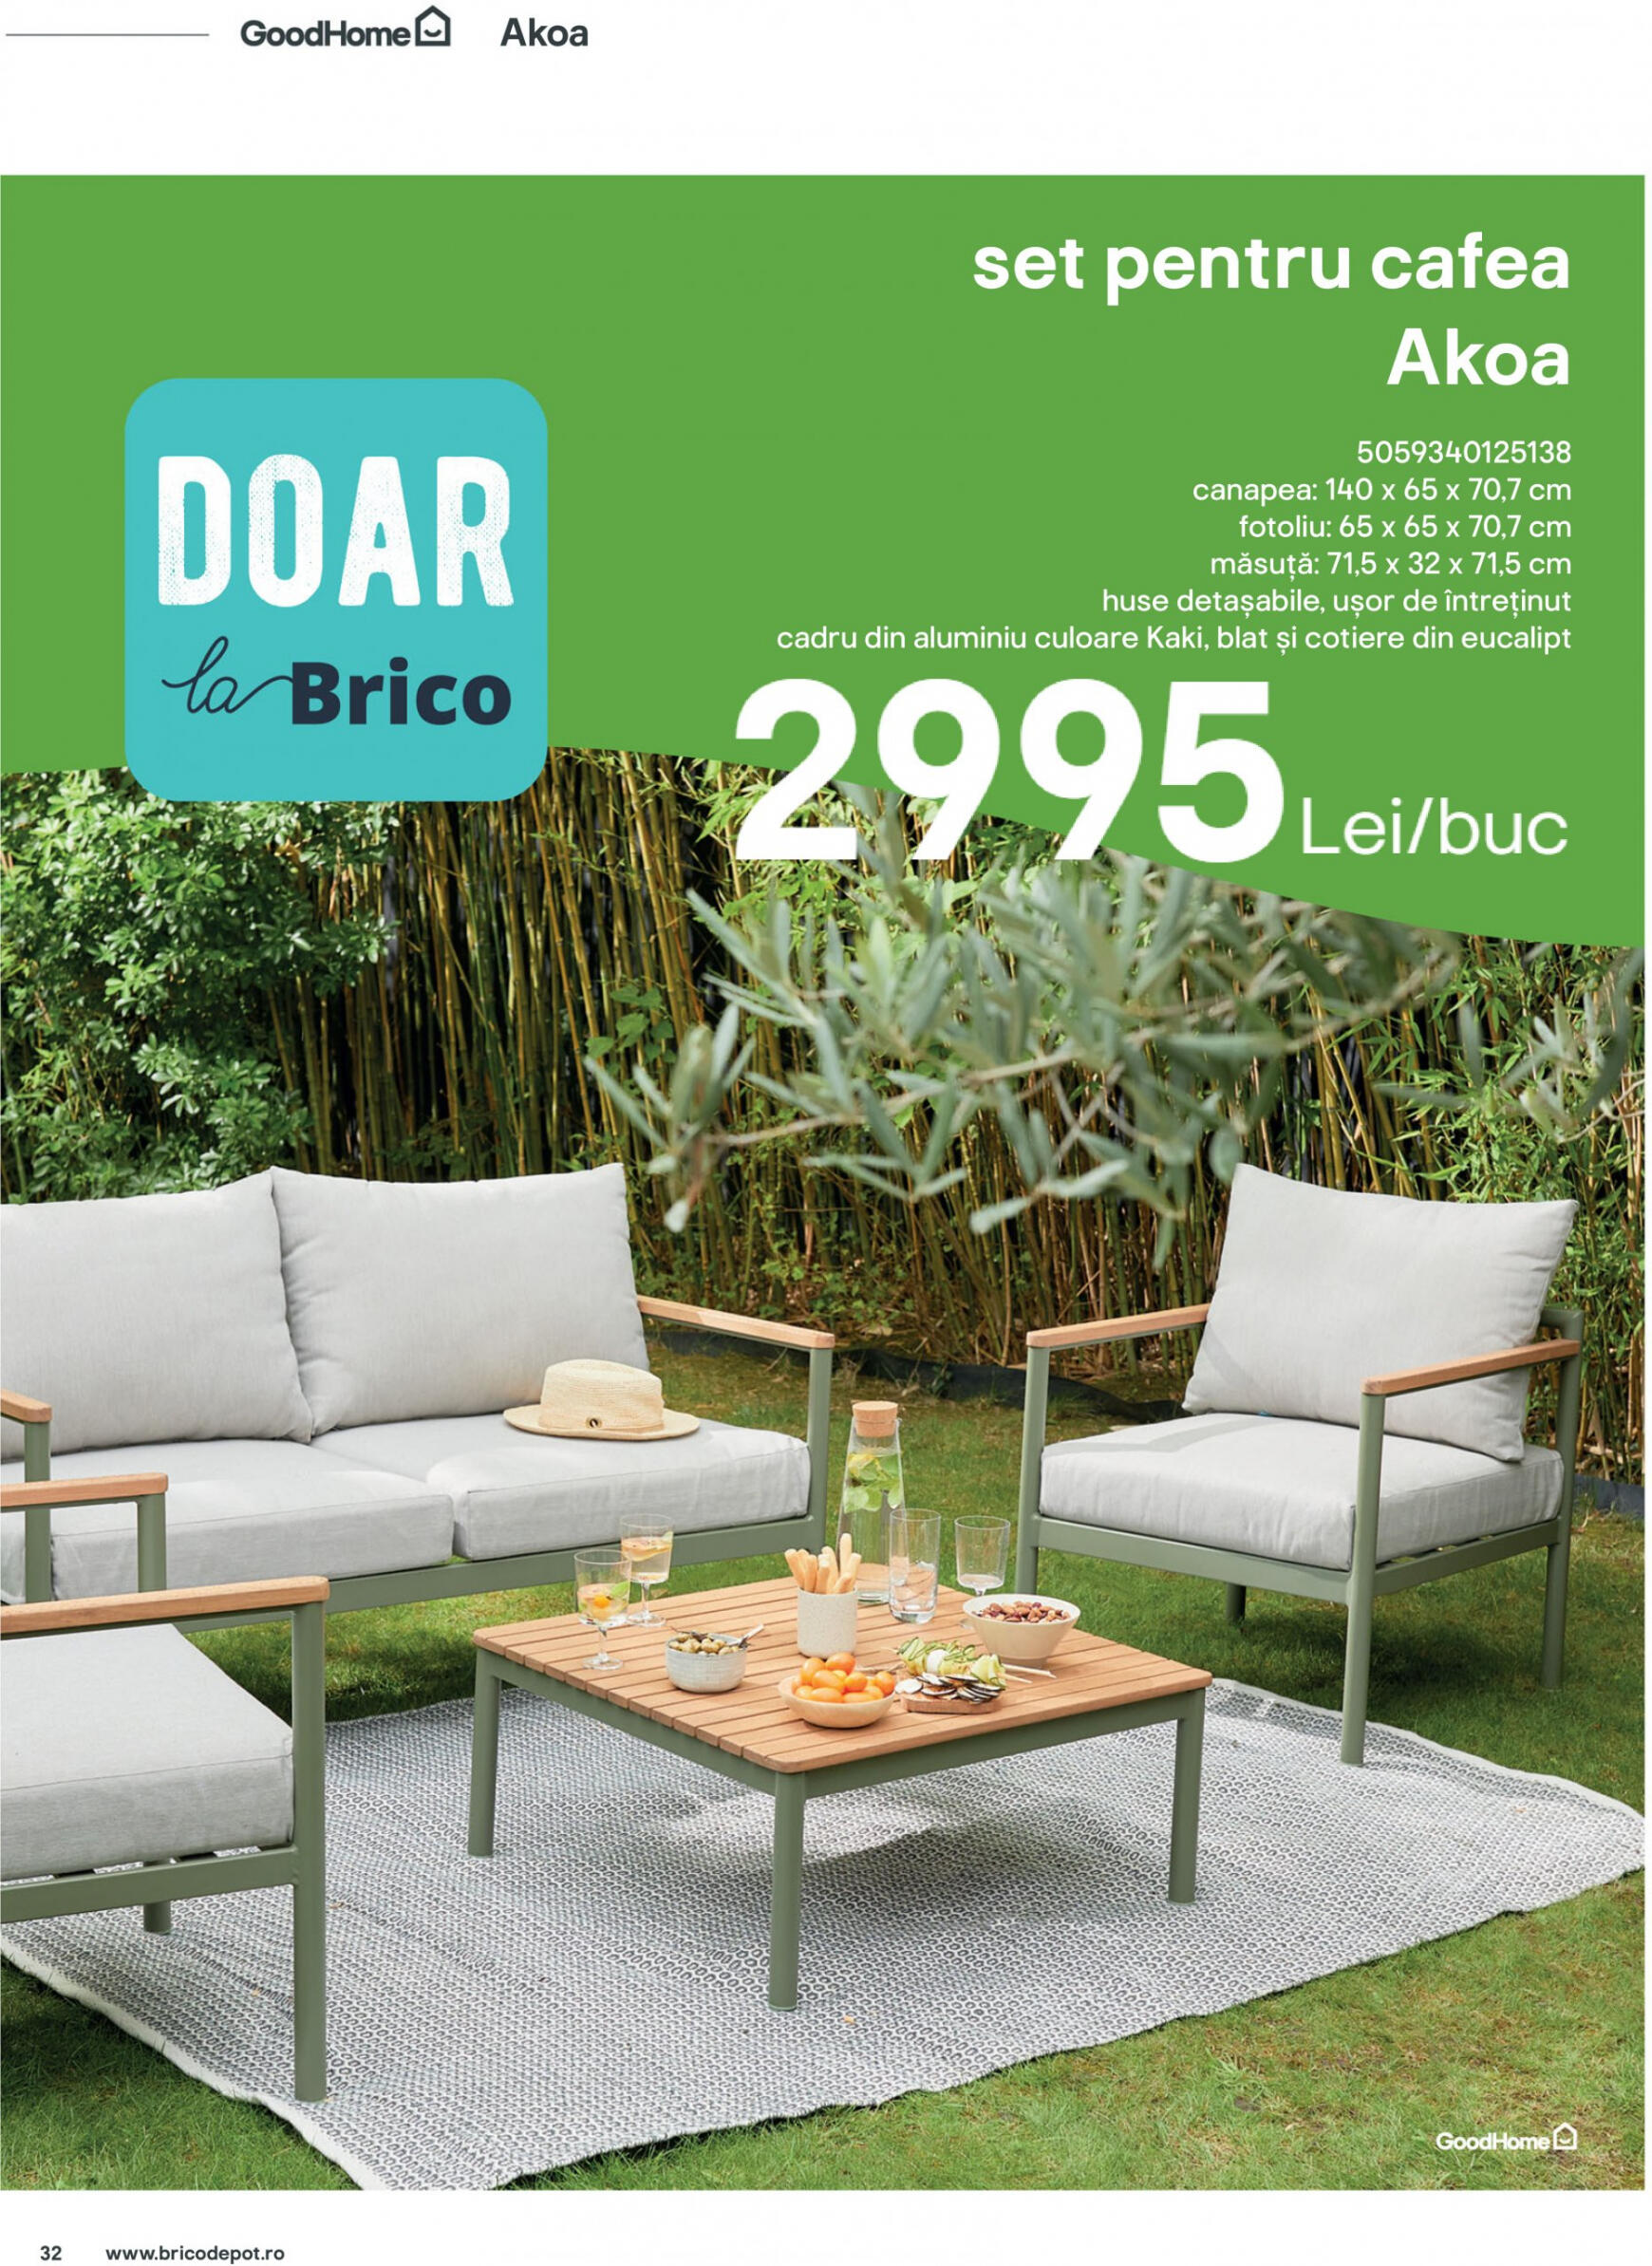 brico-depot - Catalog nou Brico Depot 22.04. - 30.06. - page: 32